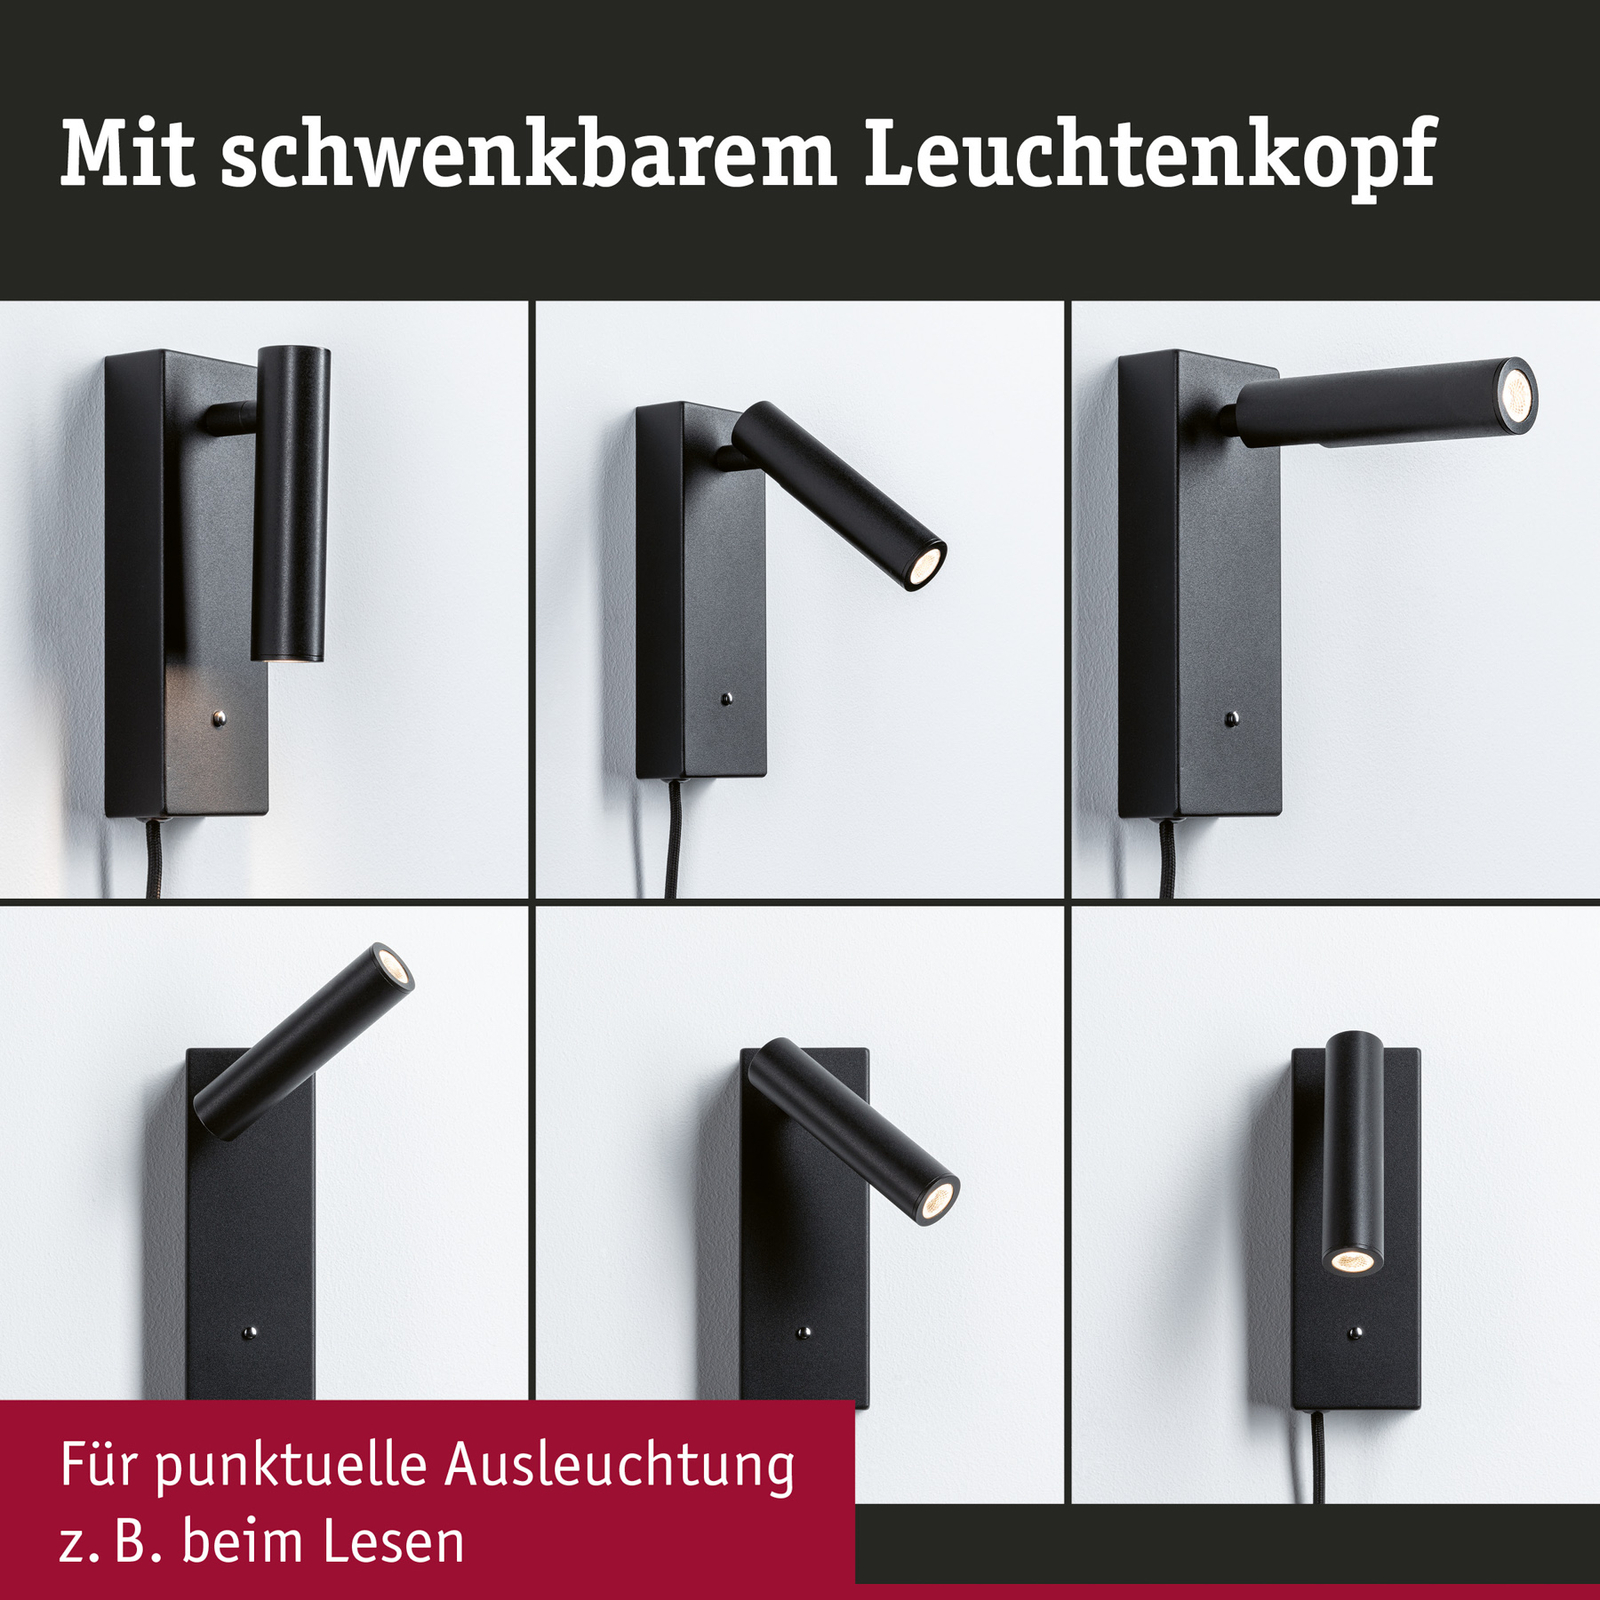 Paulmann Hulda USB LED-Wandspot 3-step-dim schwarz